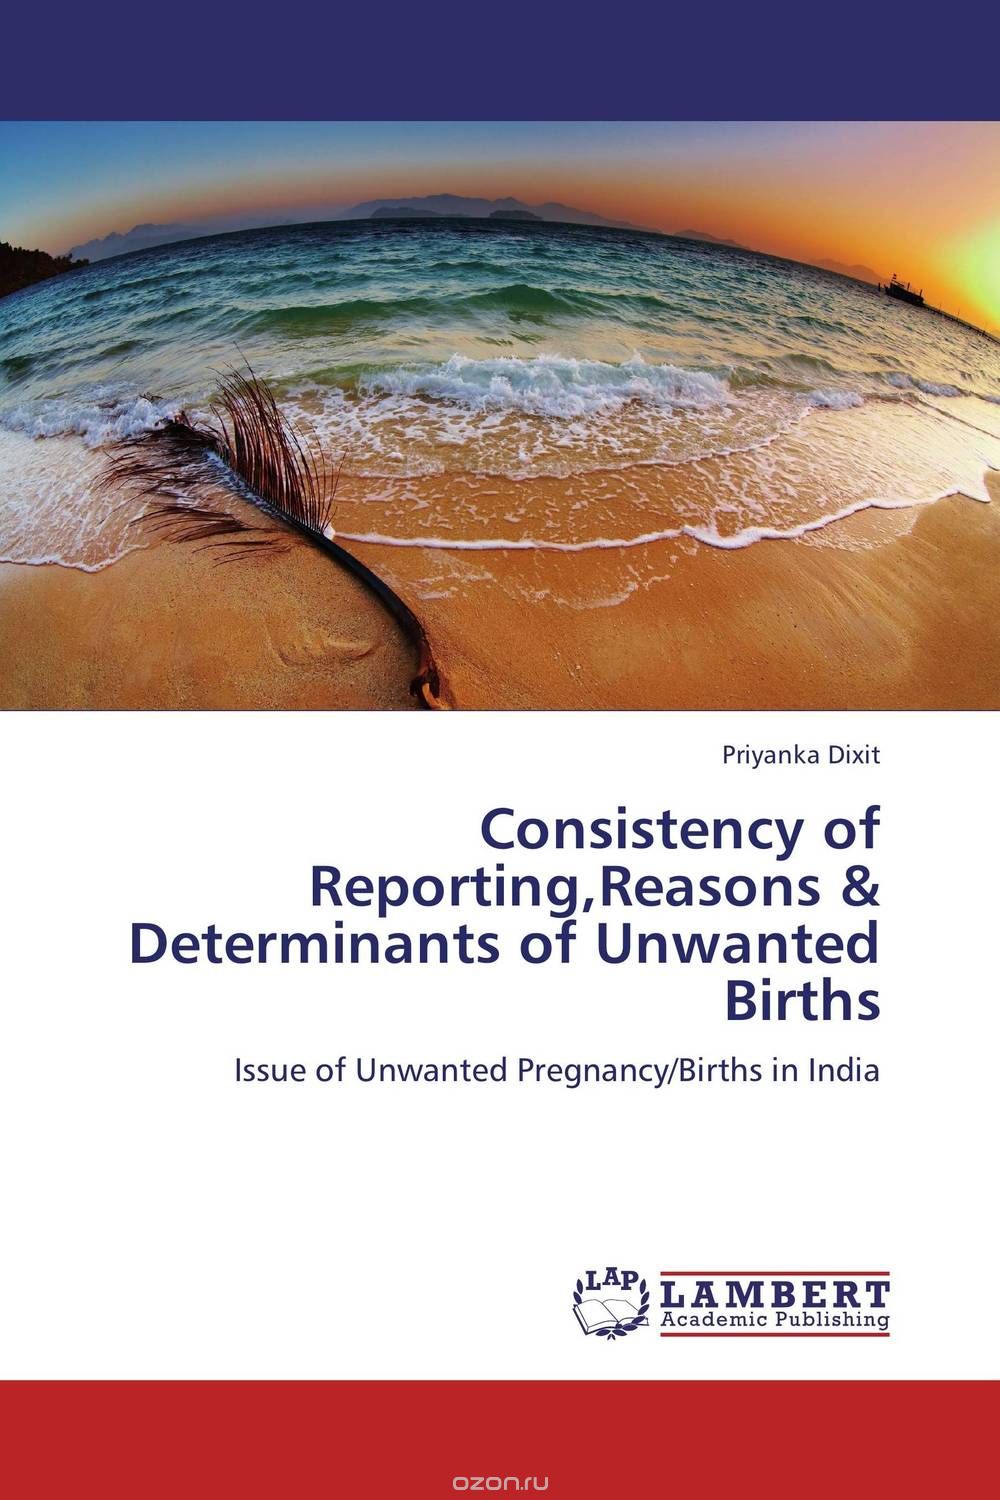 Скачать книгу "Consistency of Reporting,Reasons & Determinants of Unwanted Births"